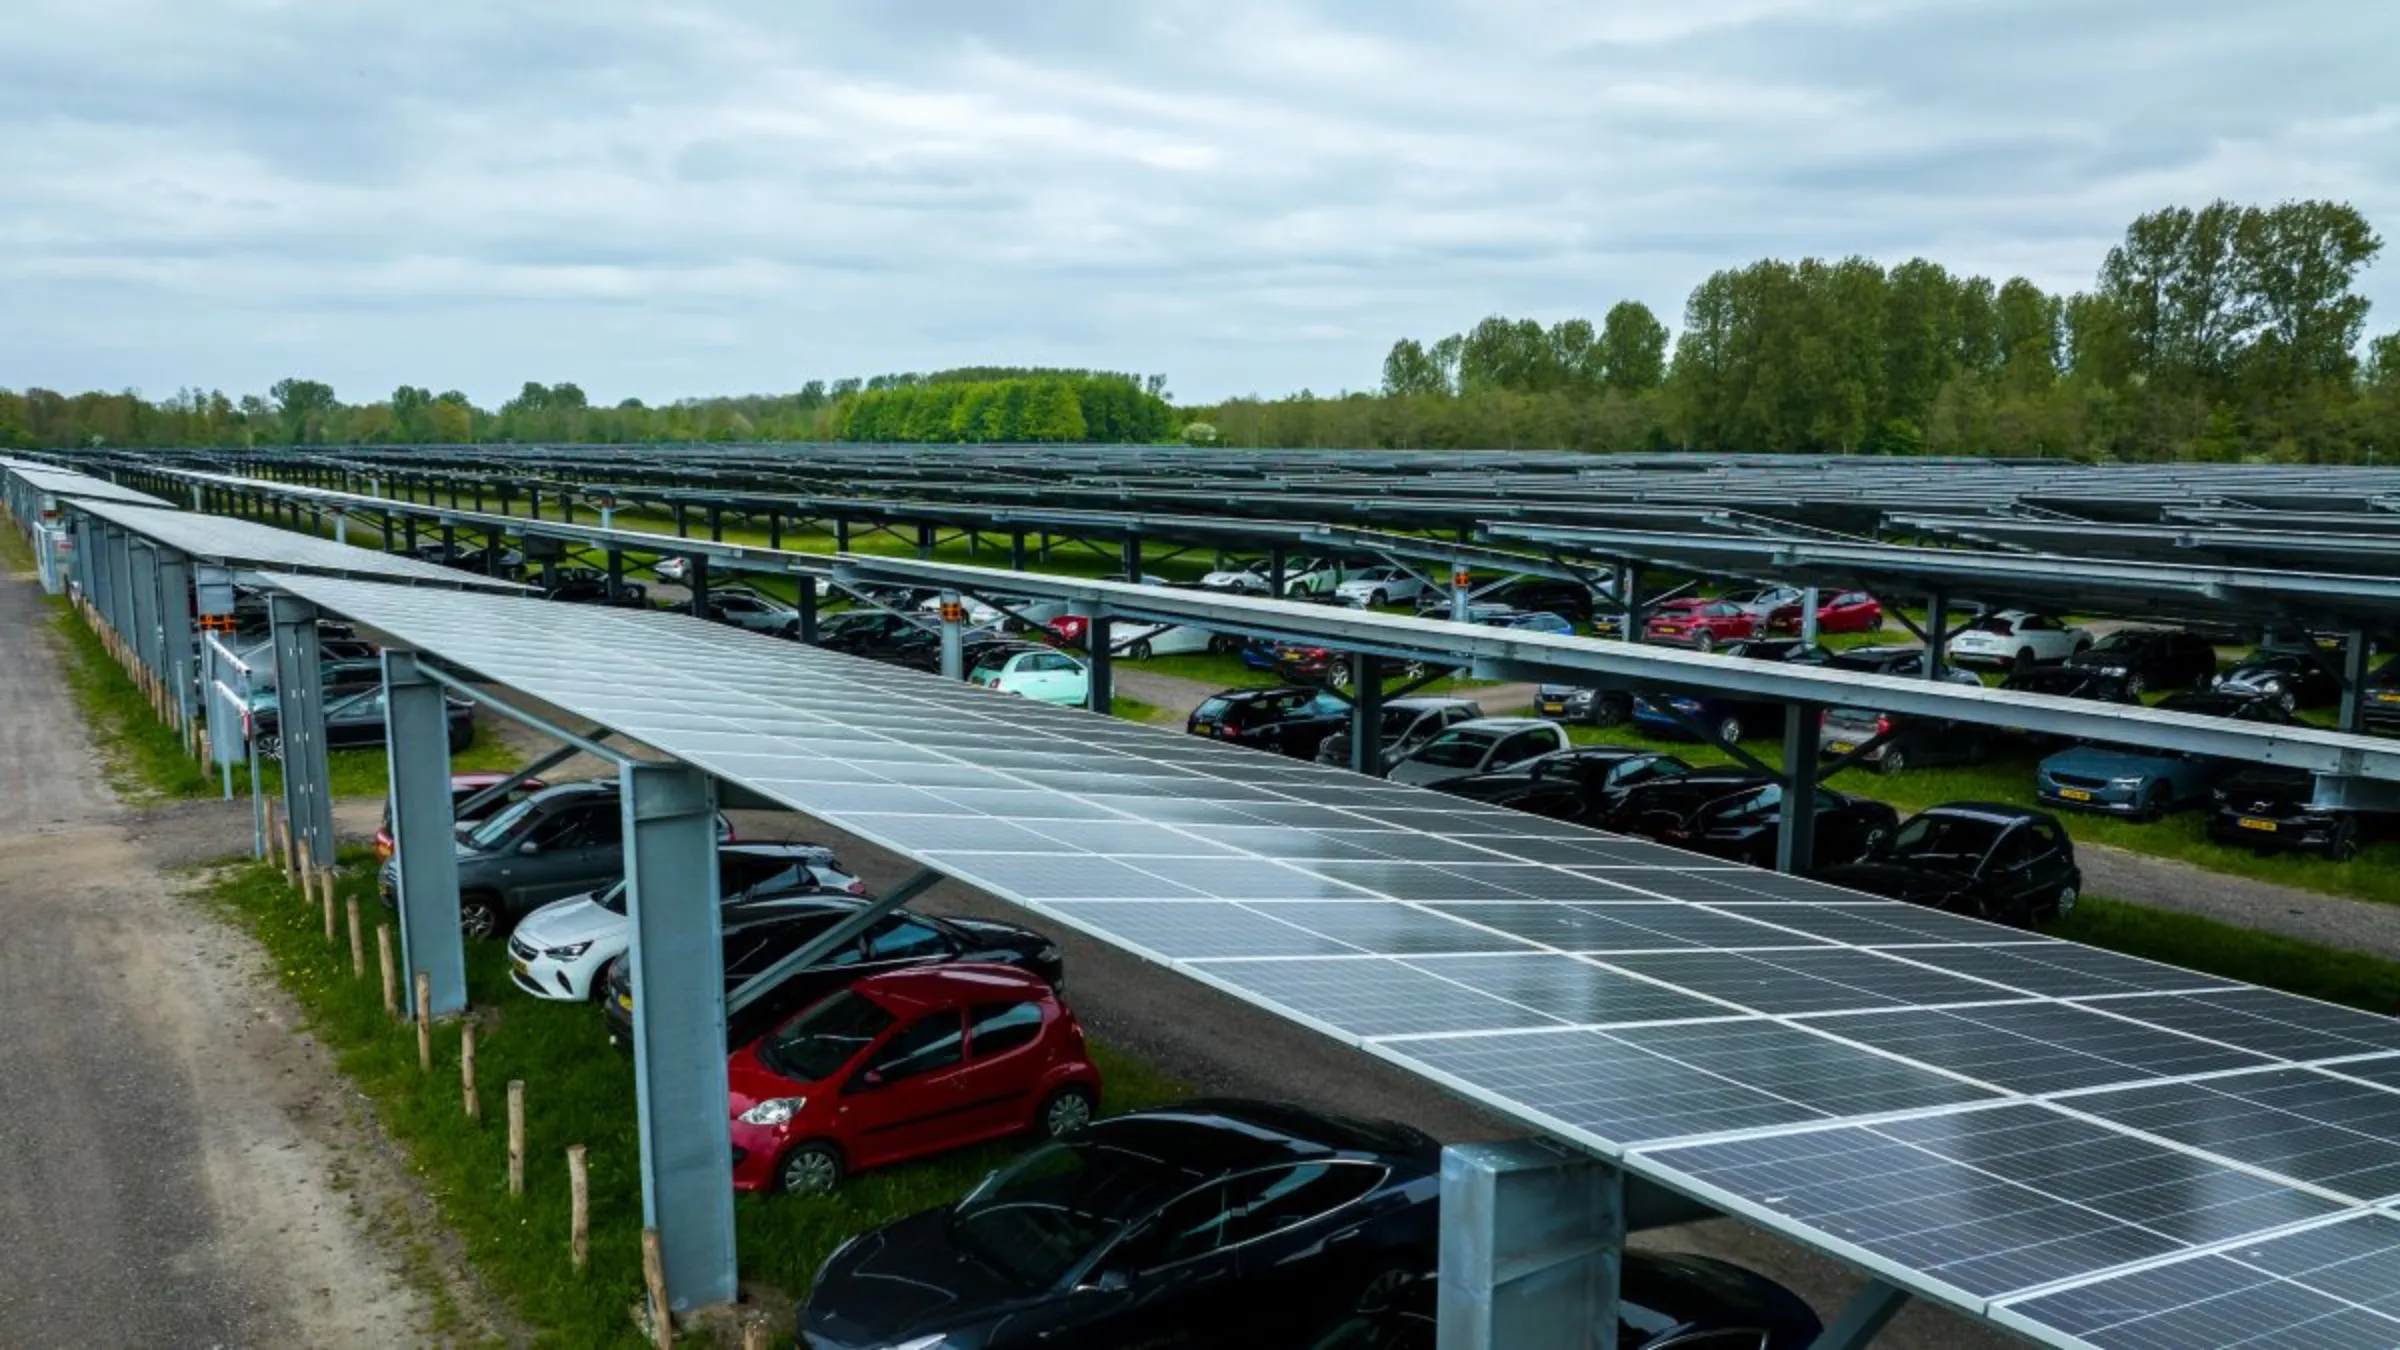 Solar Carport Biddinghuizen in Biddinghuizen, the Netherlands, Solarfields/Handout via Thomson Reuters Foundation